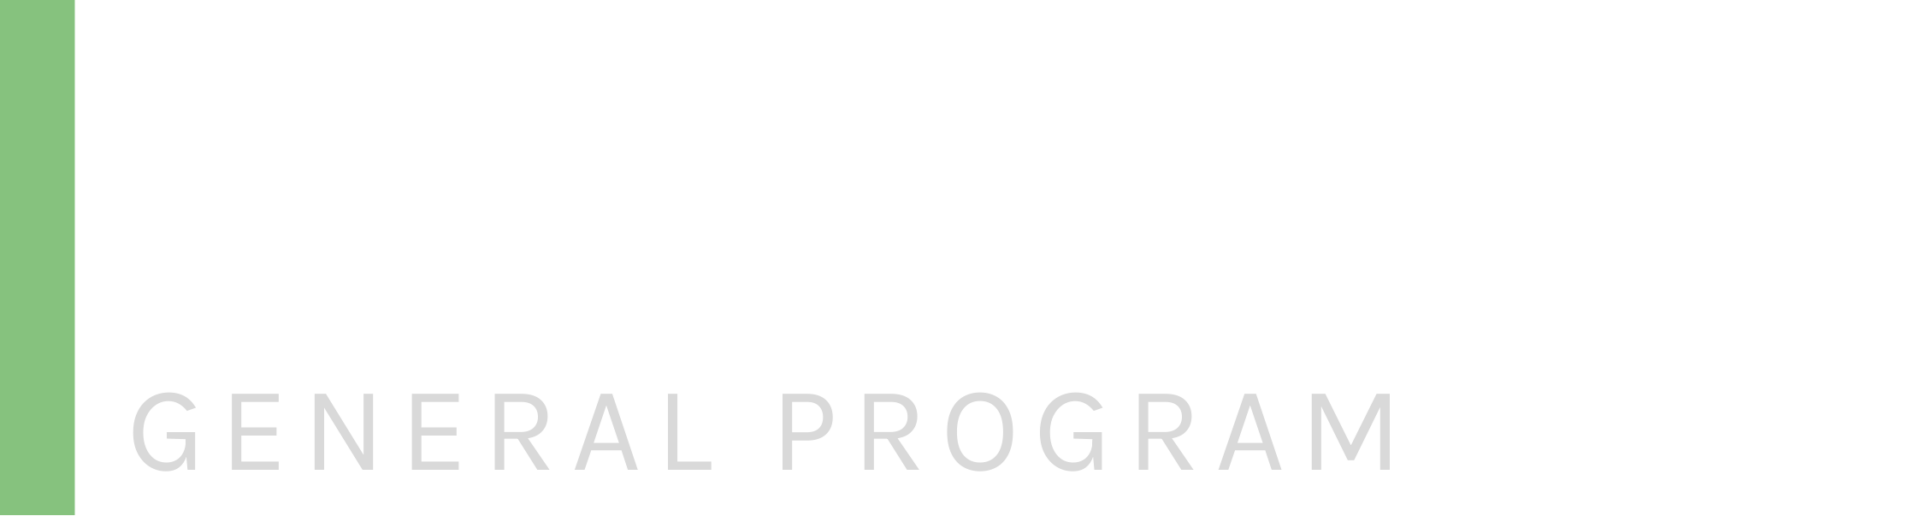 WTFP General Program - White